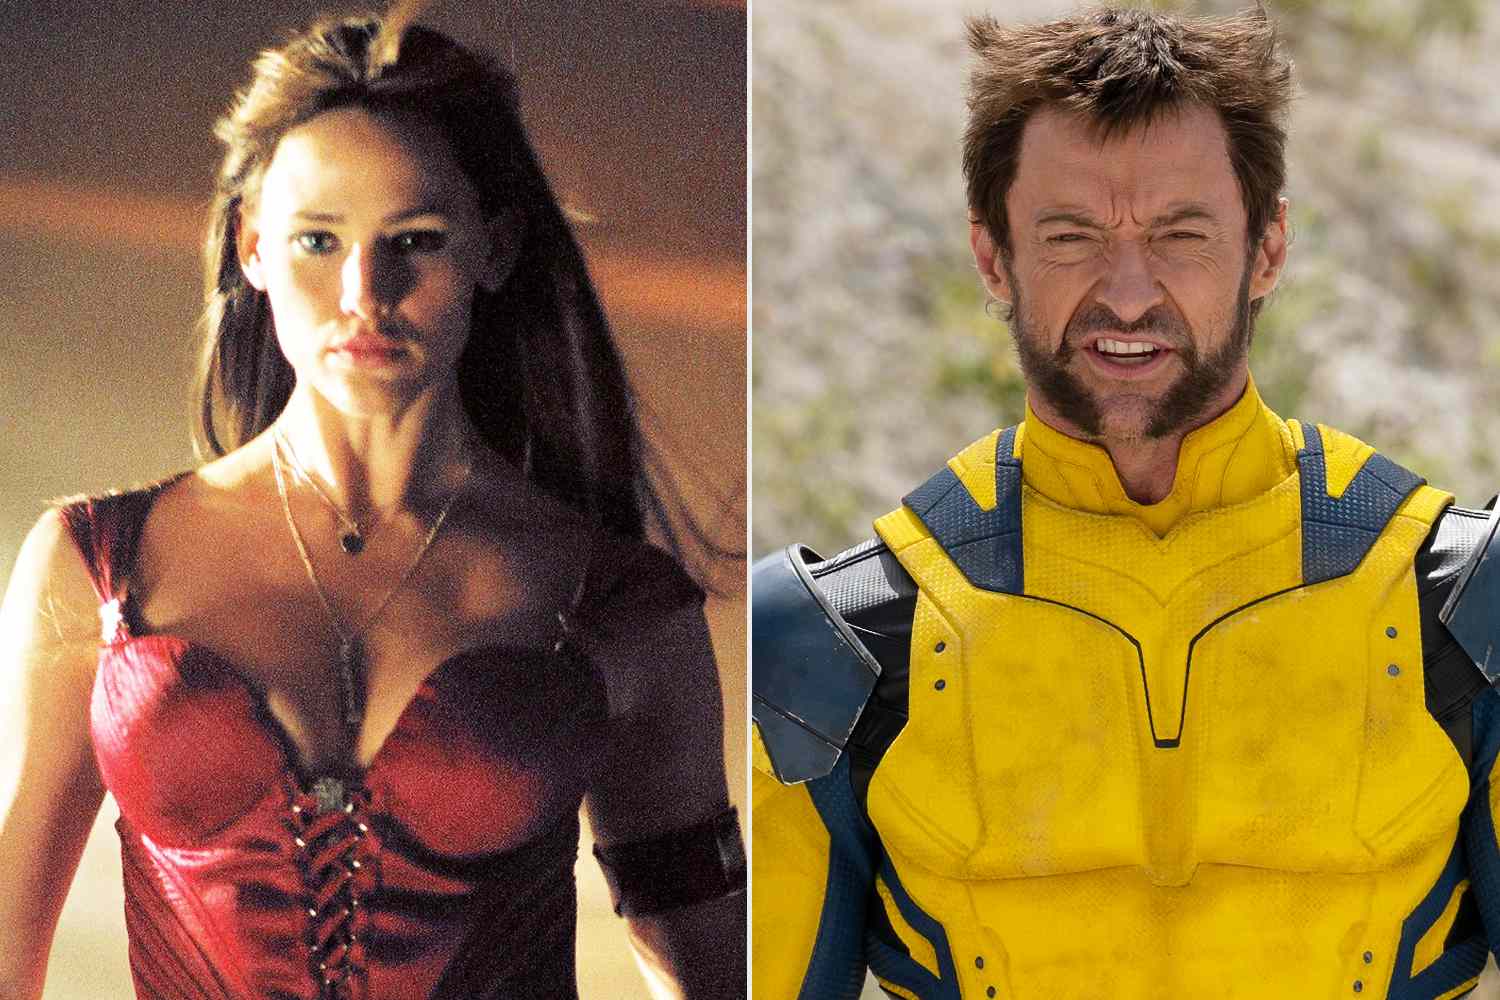 Jennifer Garner and Hugh Jackman OK'd Those 'Deadpool' Divorce Jokes, Director Says: 'All in a Playful Spirit'